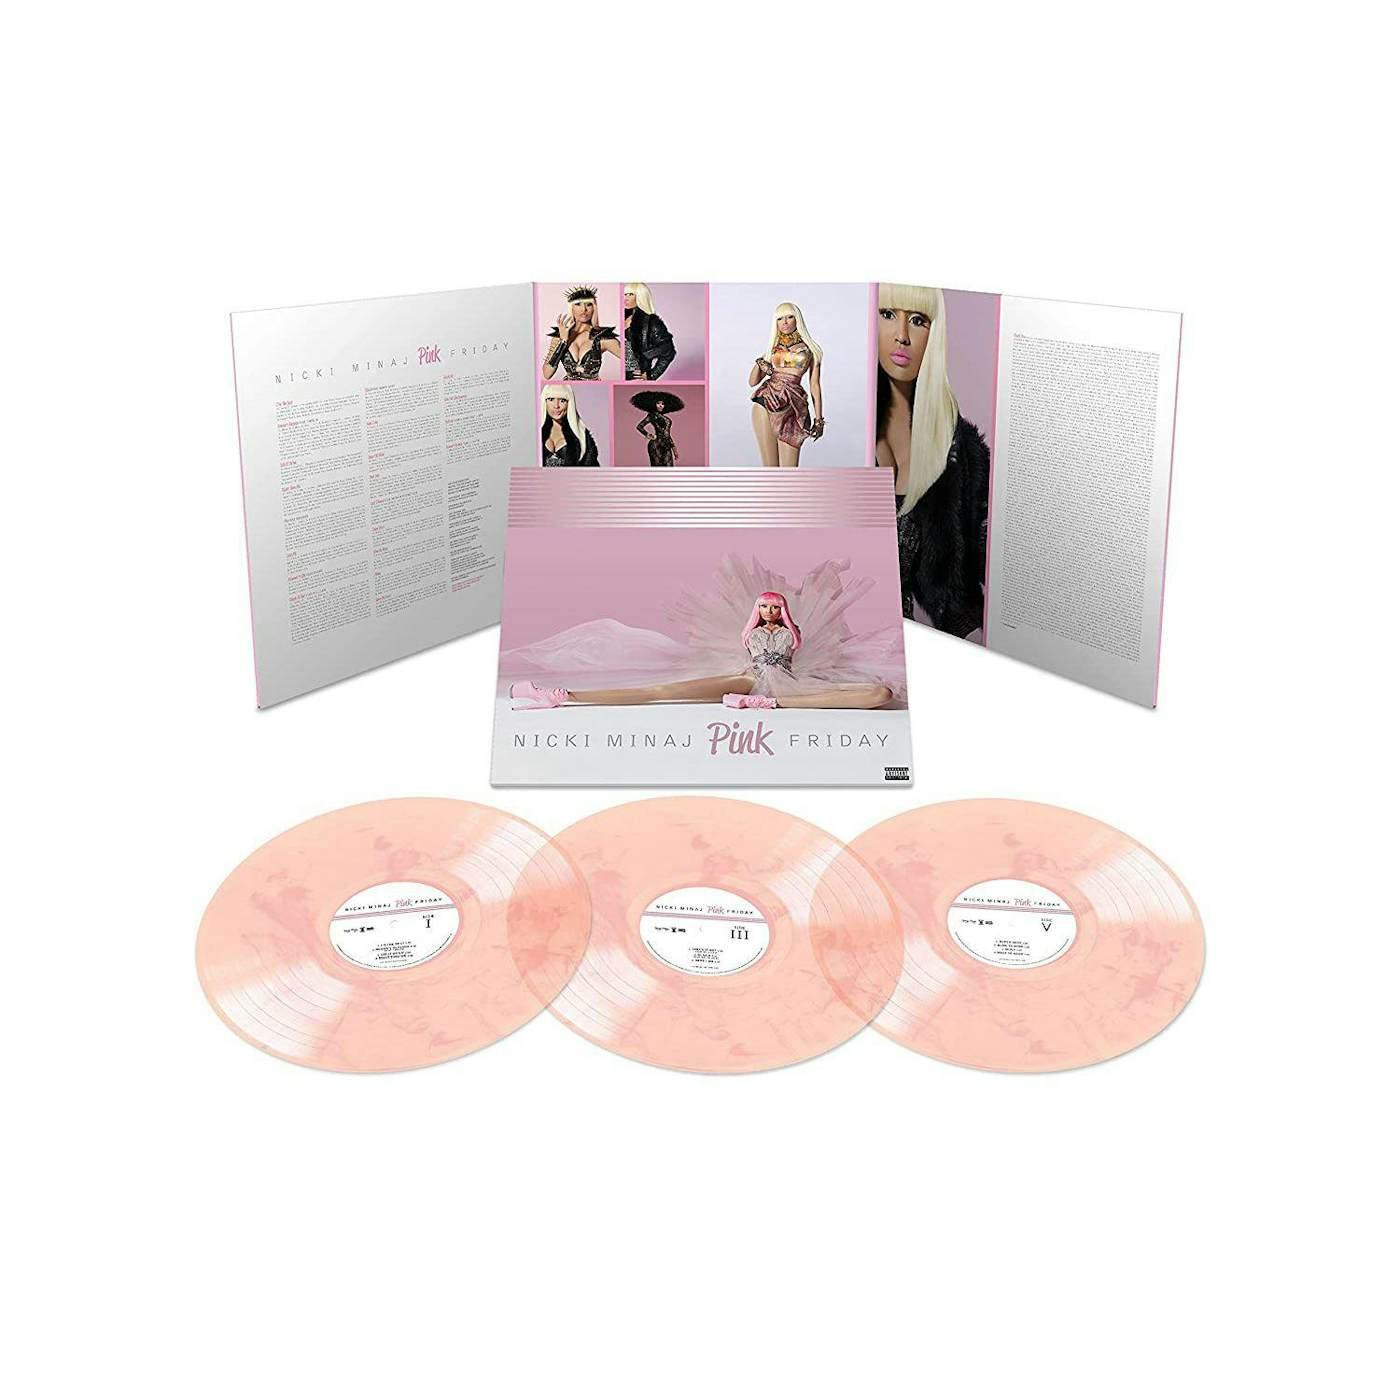 Nicki Minaj Pink Friday (10th Anniversary/Deluxe/Pink/White Swirl/3LP) (Explicit Content) Vinyl Record